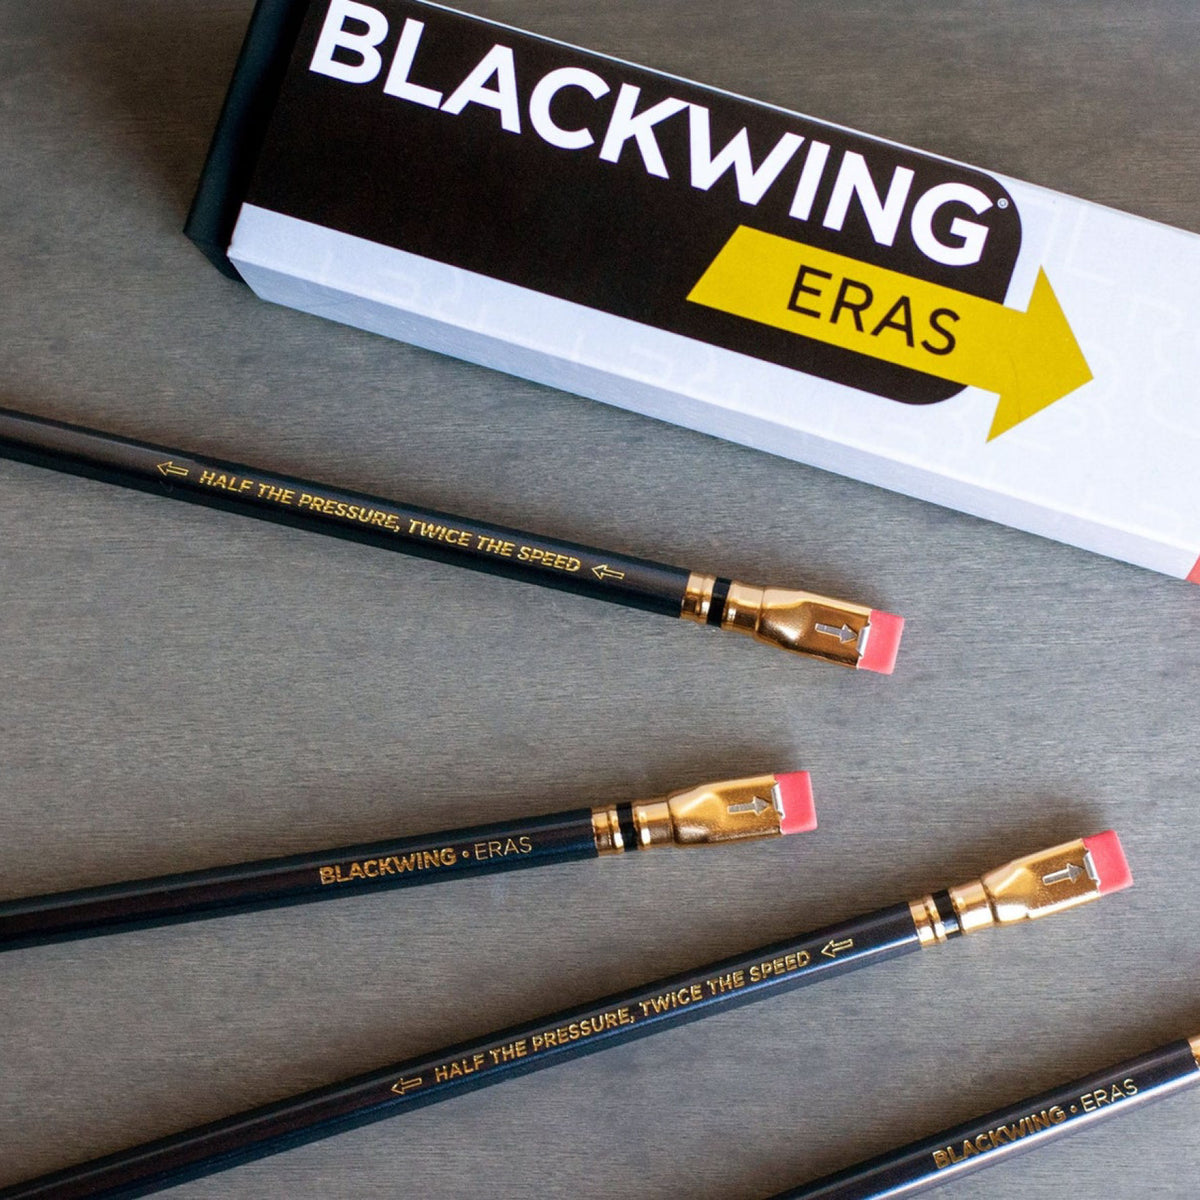 Packaging for Blackwing Eras 2022